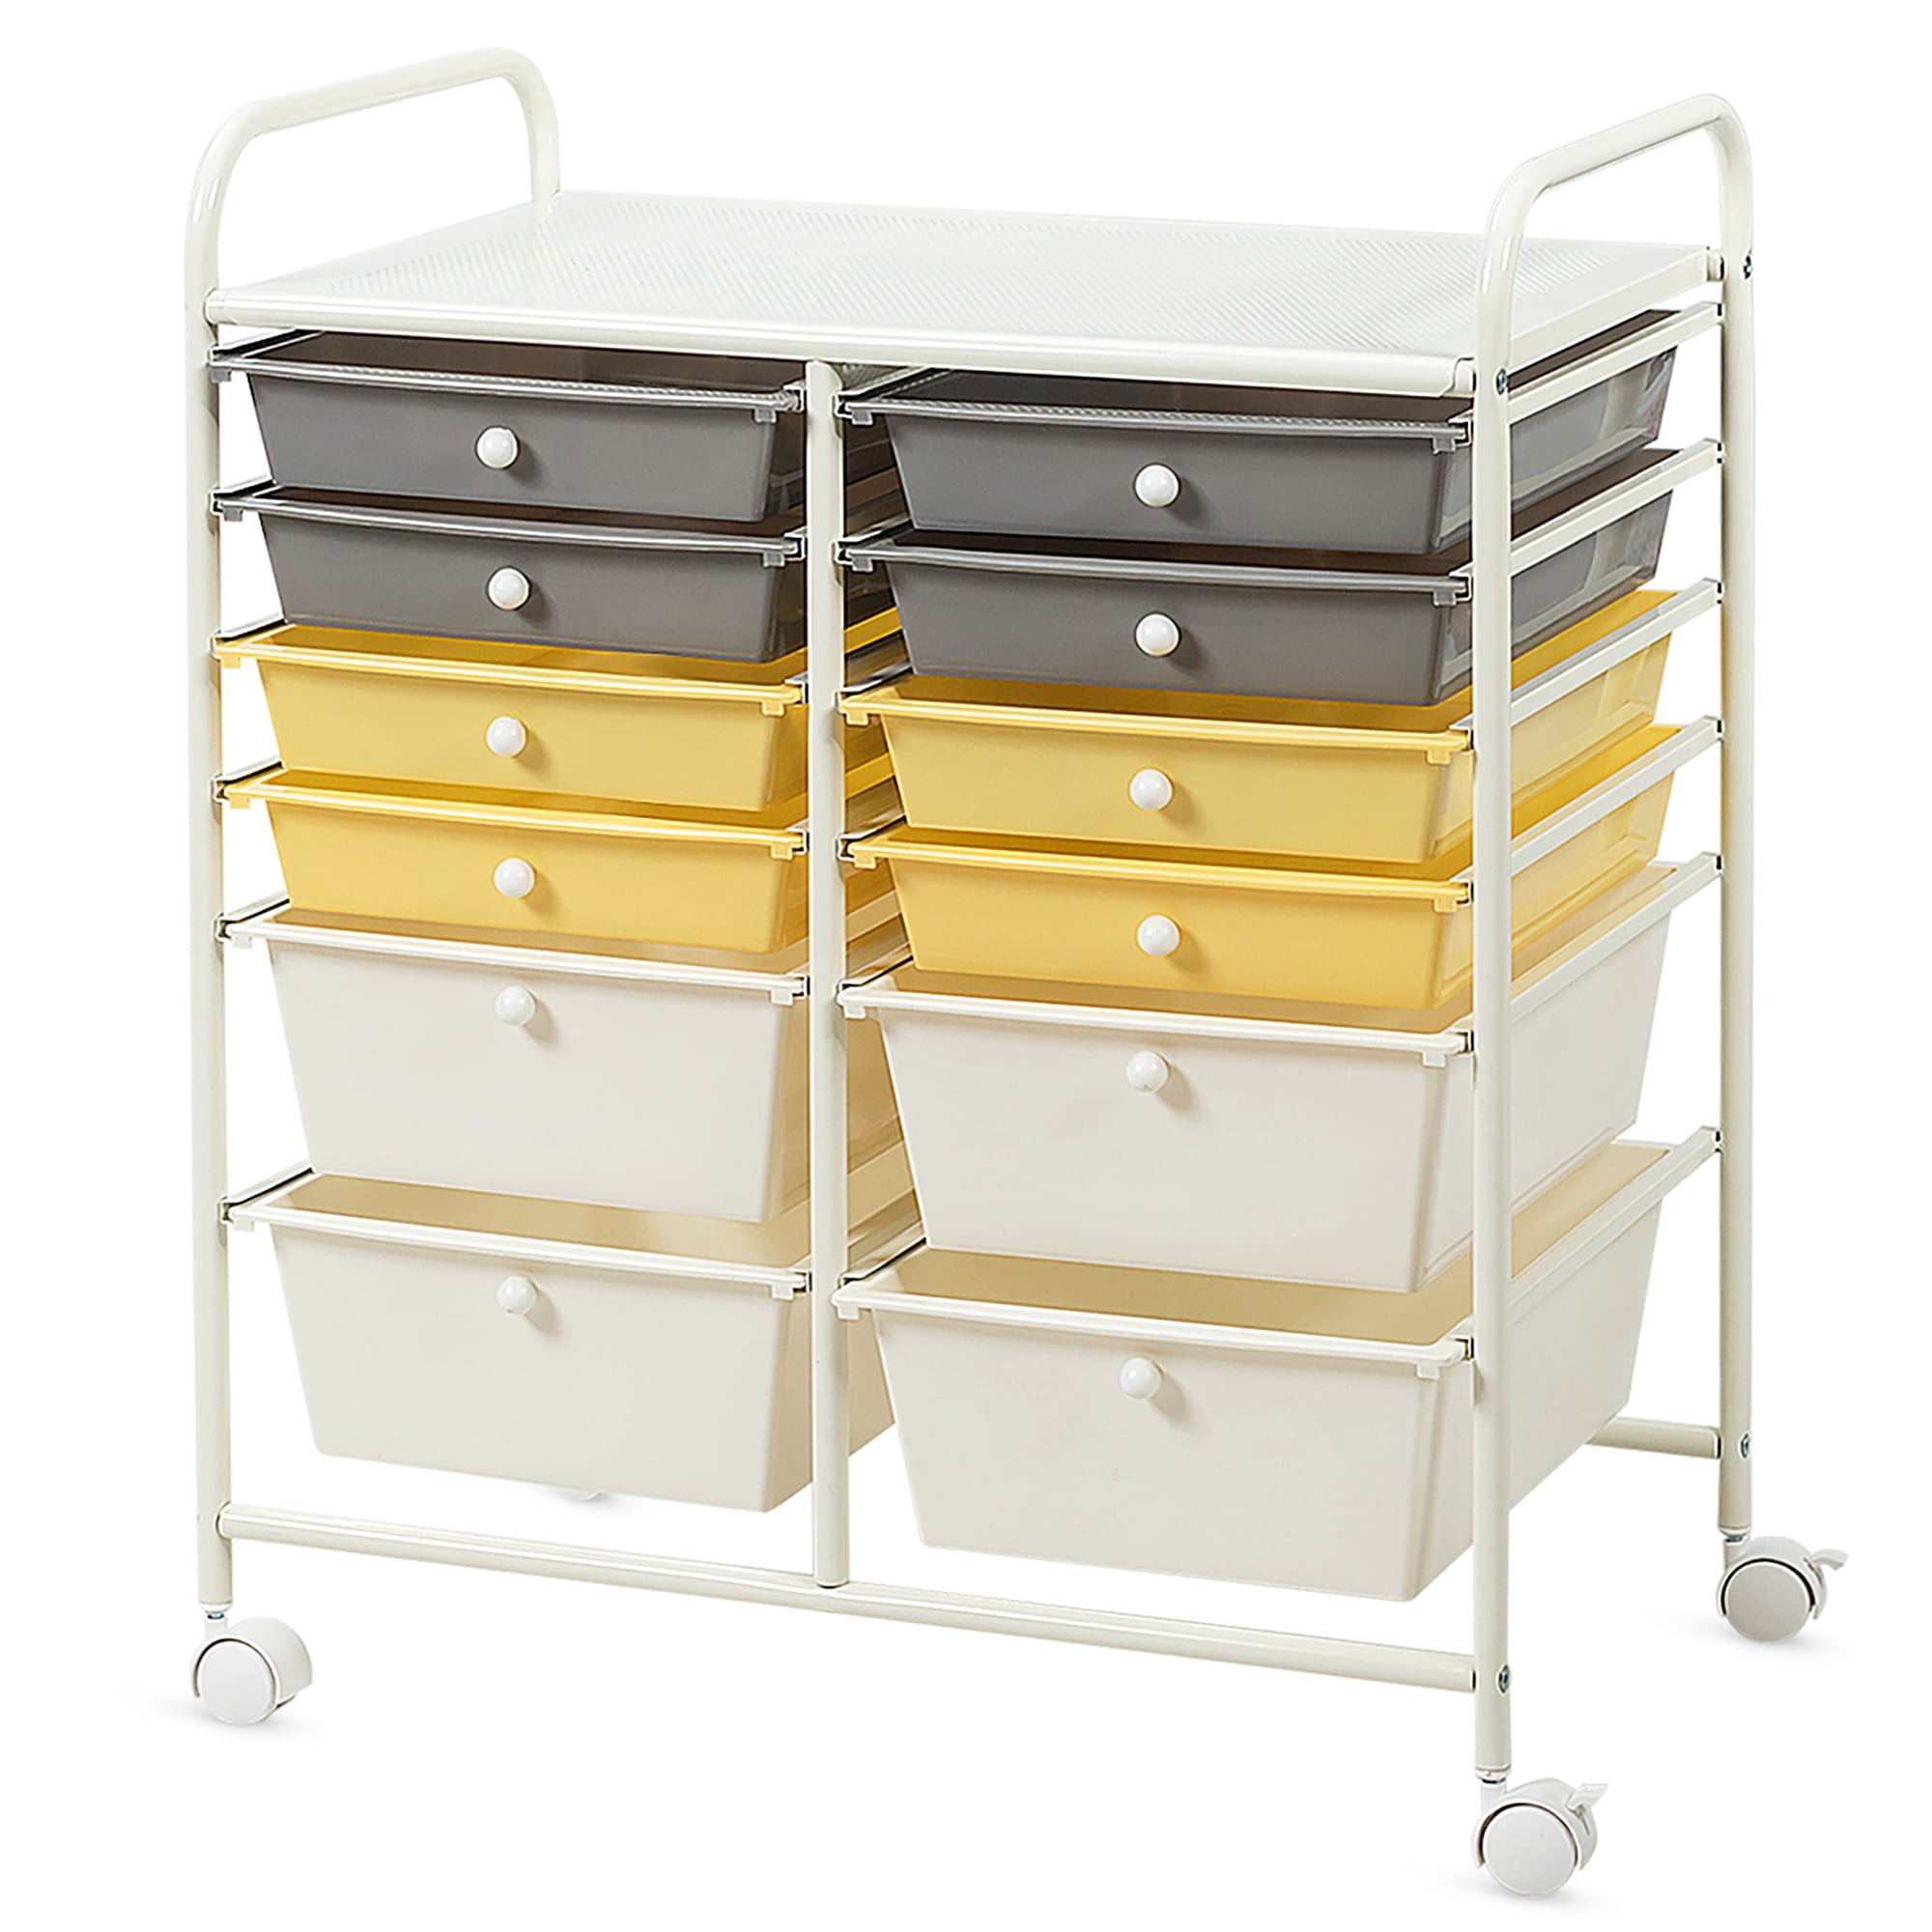 12 Drawers Rolling Cart Storage Scrapbook Paper Organizer Bins-Deep  Multicolor